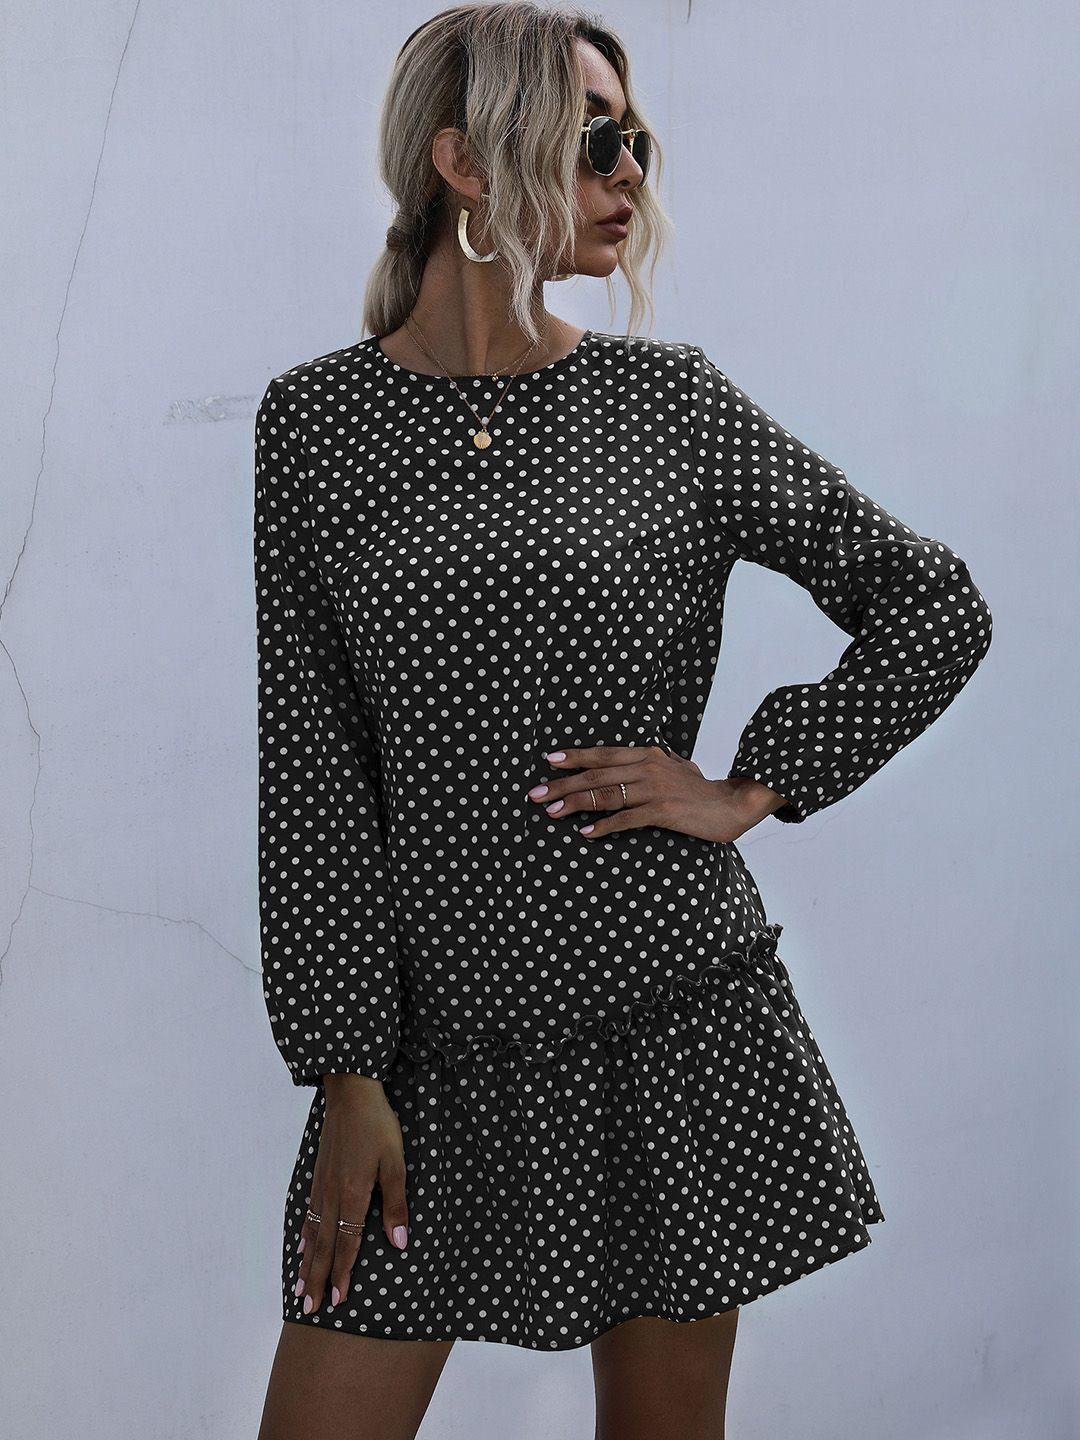 urbanic black & white polka dot printa-line dress with ruffles